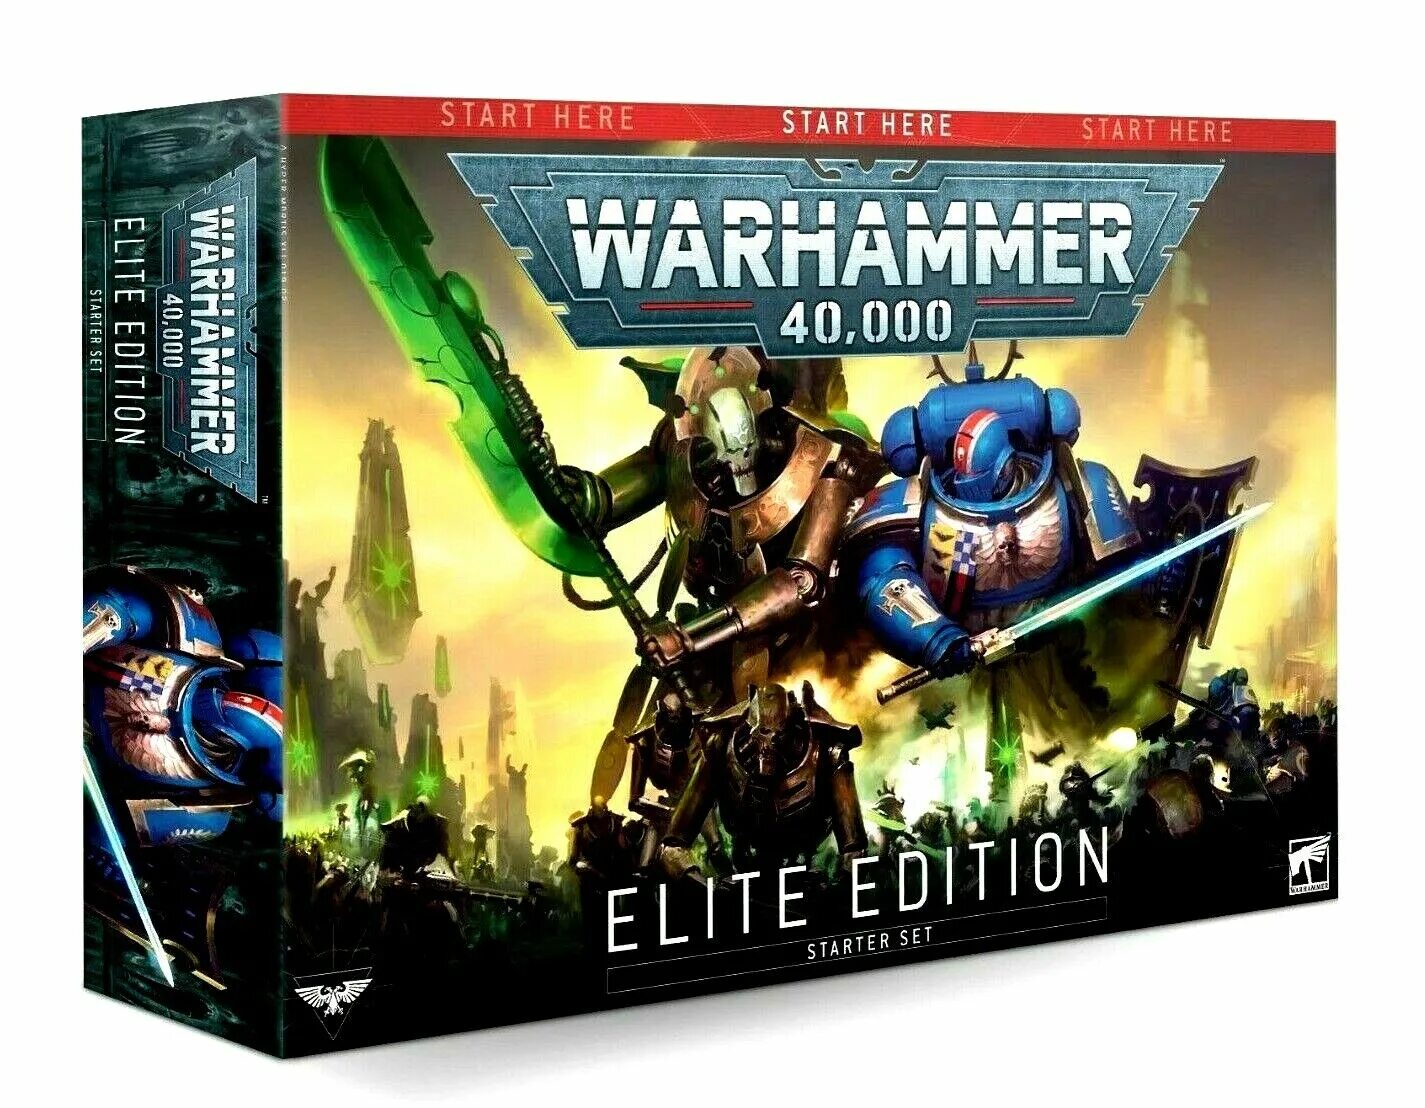 Warhammer starter. Вархаммер 40000 стартовый набор. Warhammer 40000 Elite Edition. Warhammer 40,000: Elite Edition Starter Set. 40k Elite Edition Starter Set.